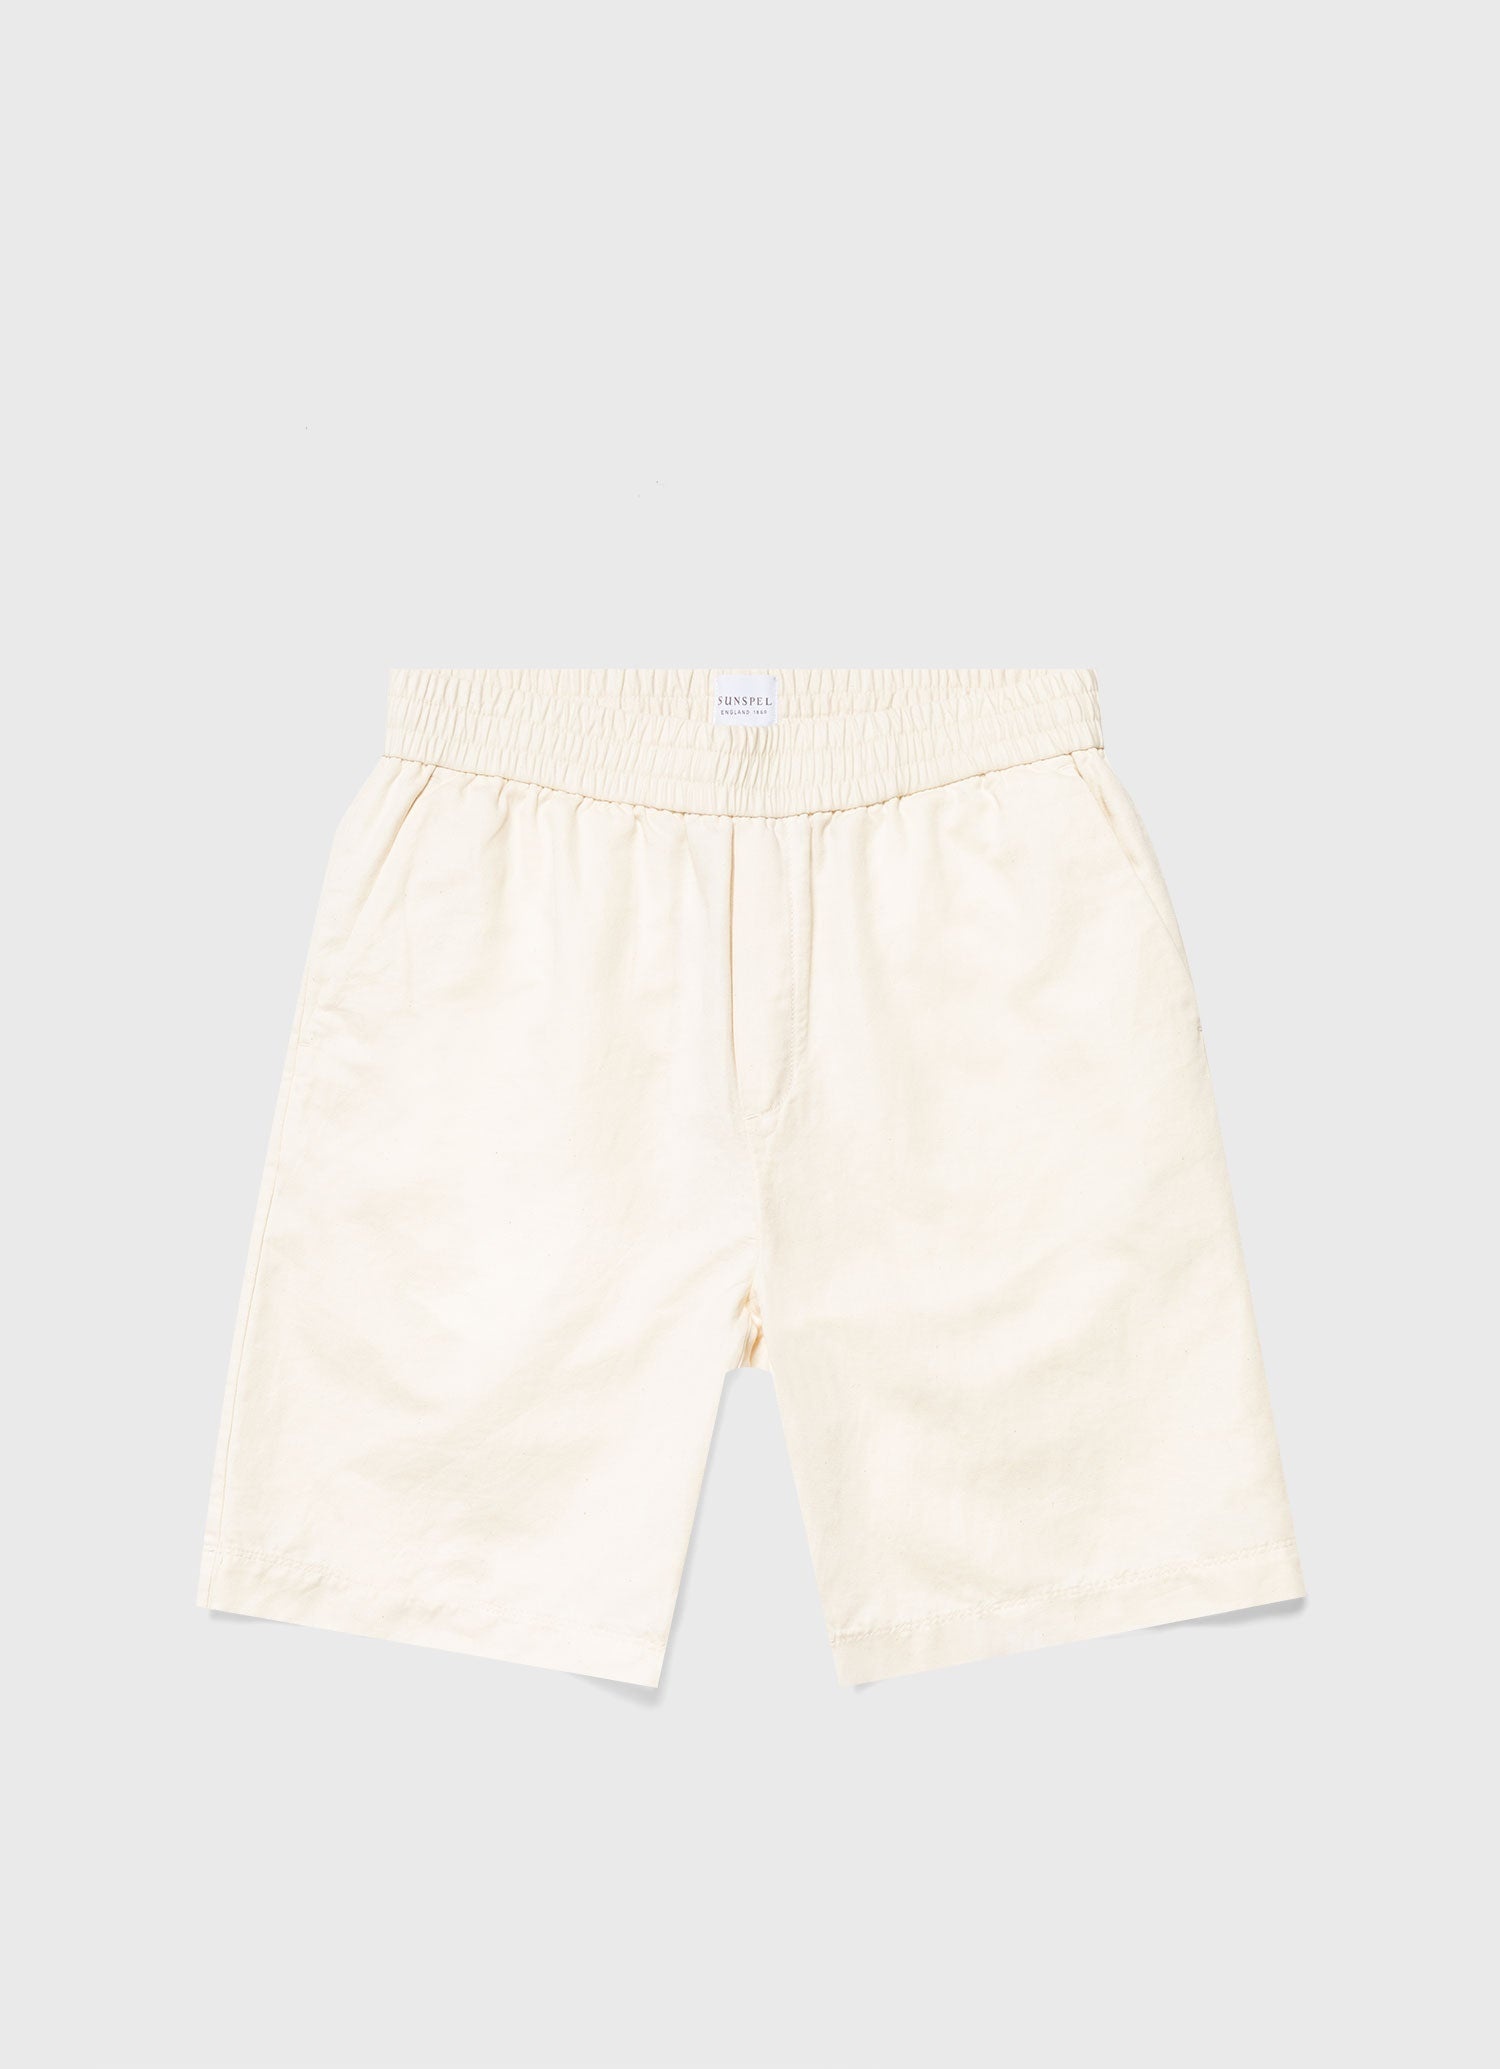 Undyed Cotton Linen Drawstring Shorts - 1